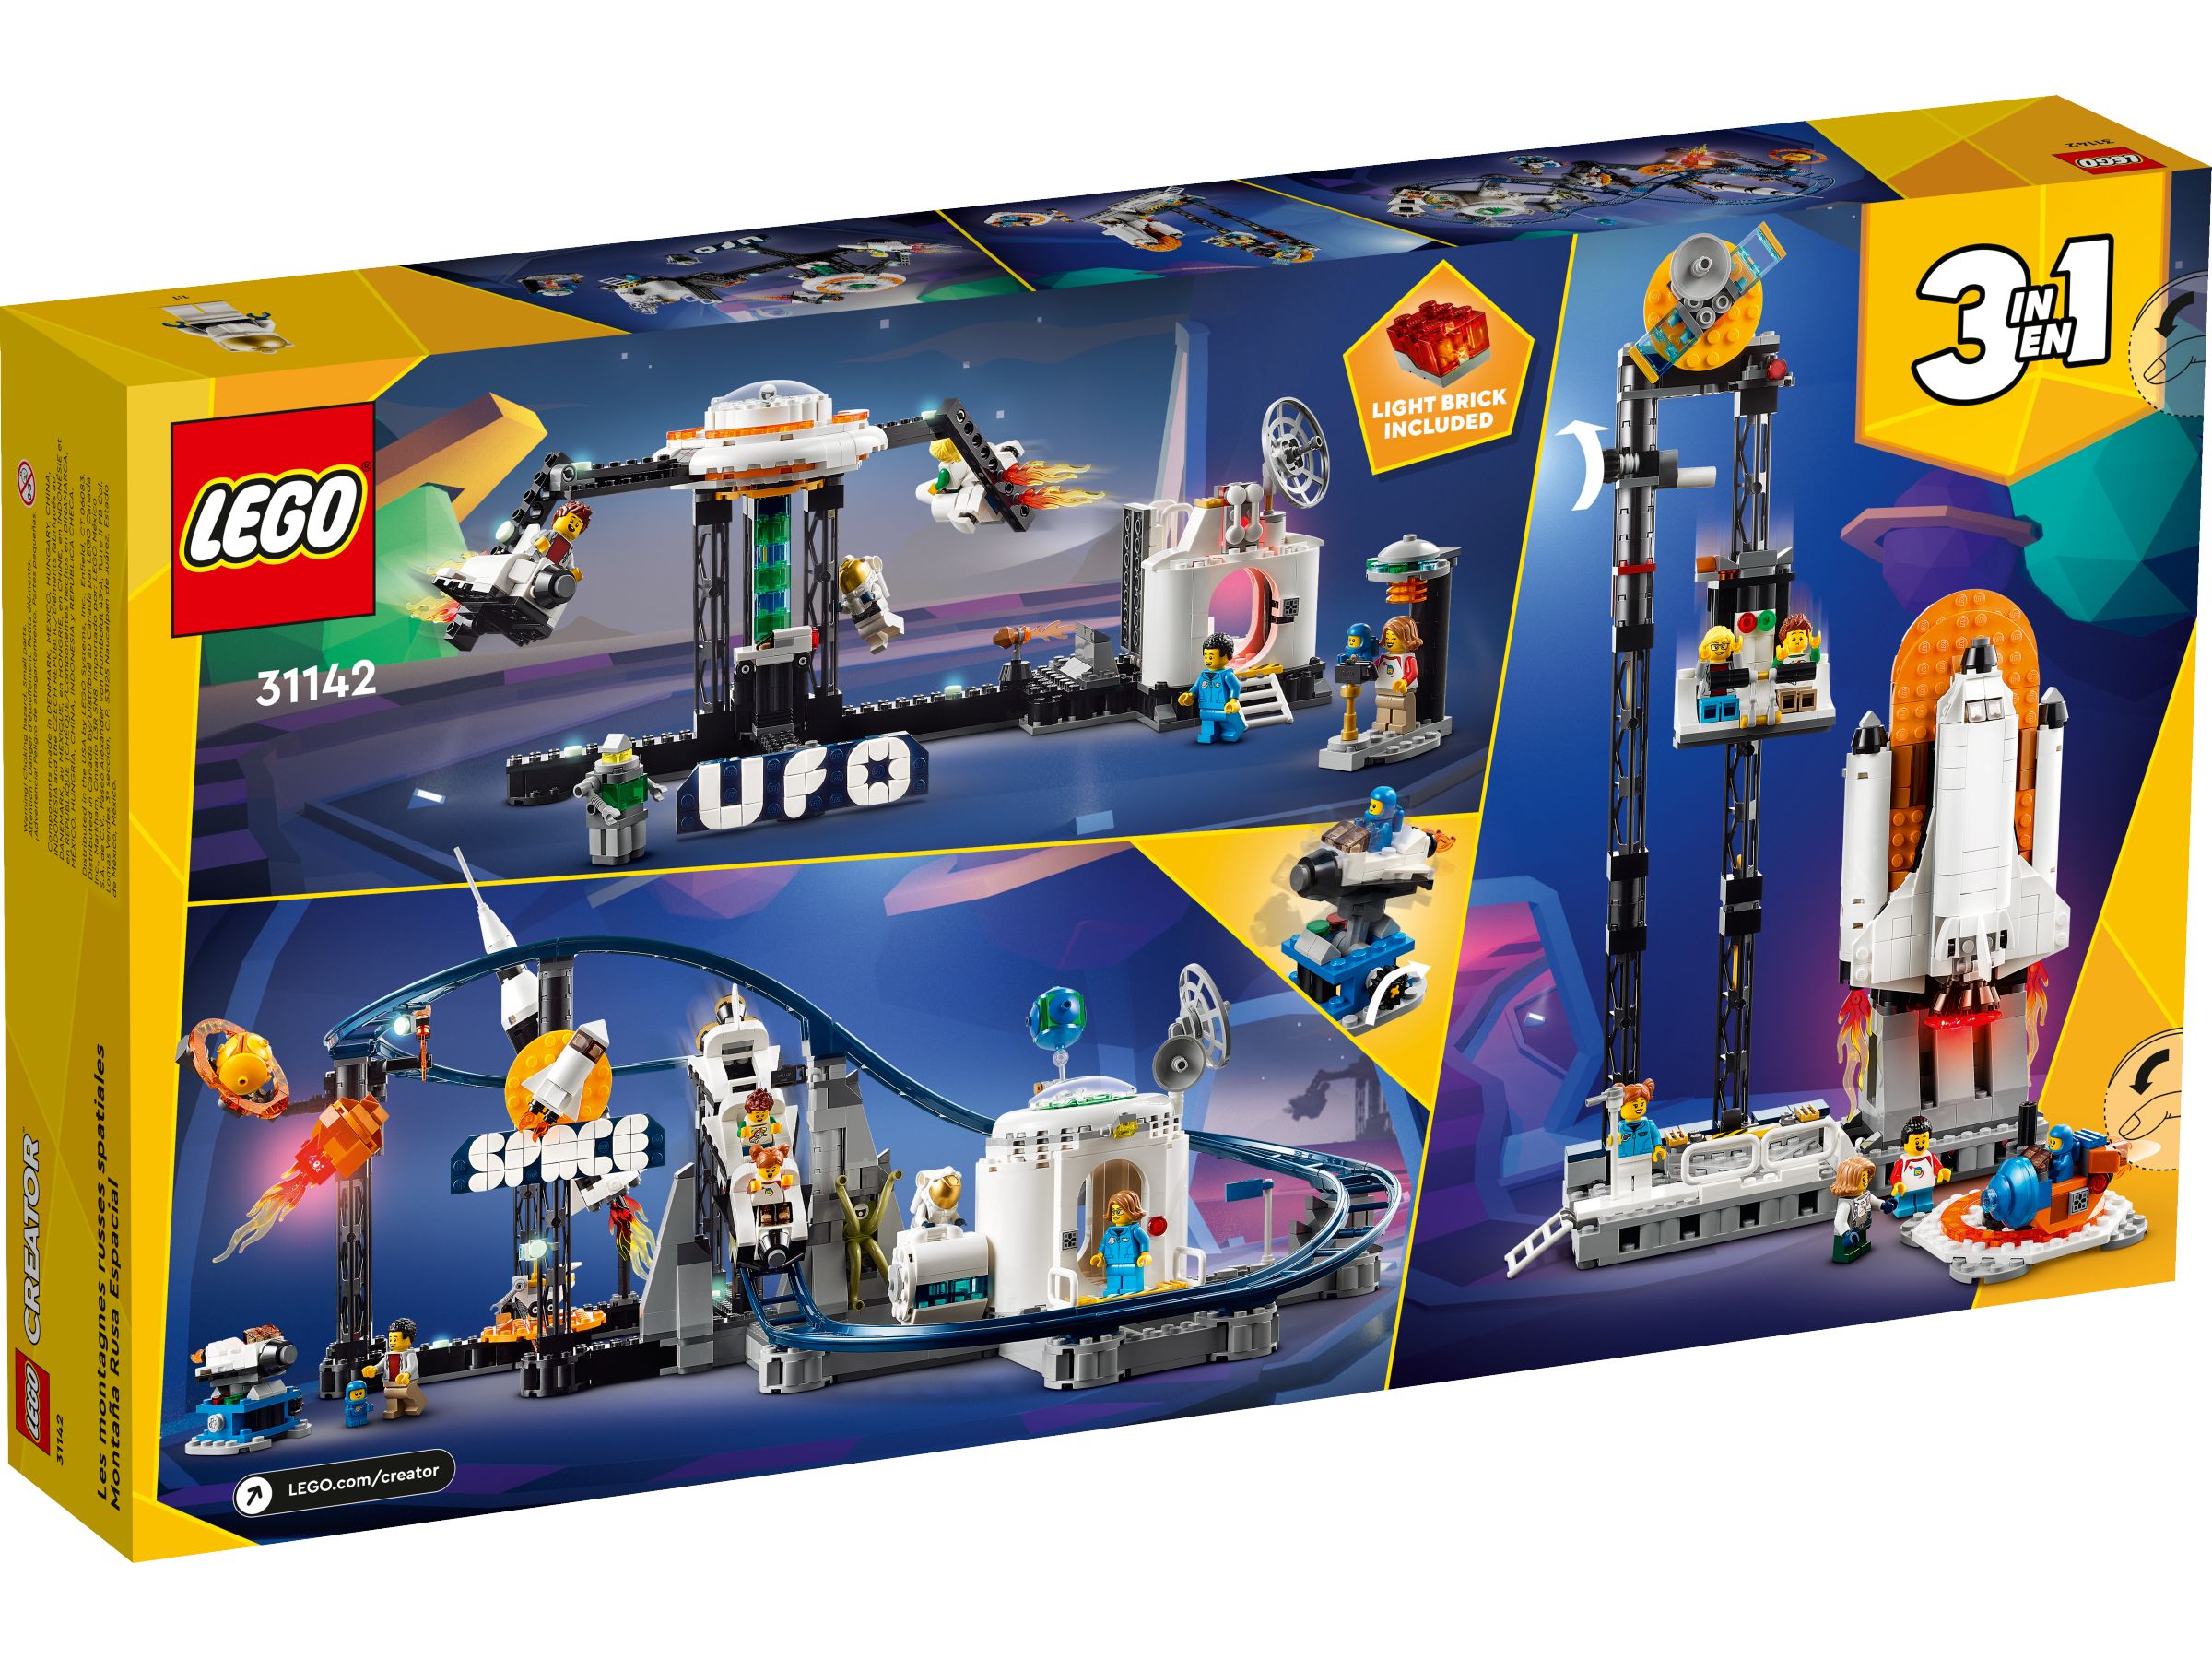 LEGO Creator 31142 Weltraum-Achterbahn LEGO_31142_Box5_v39.jpg